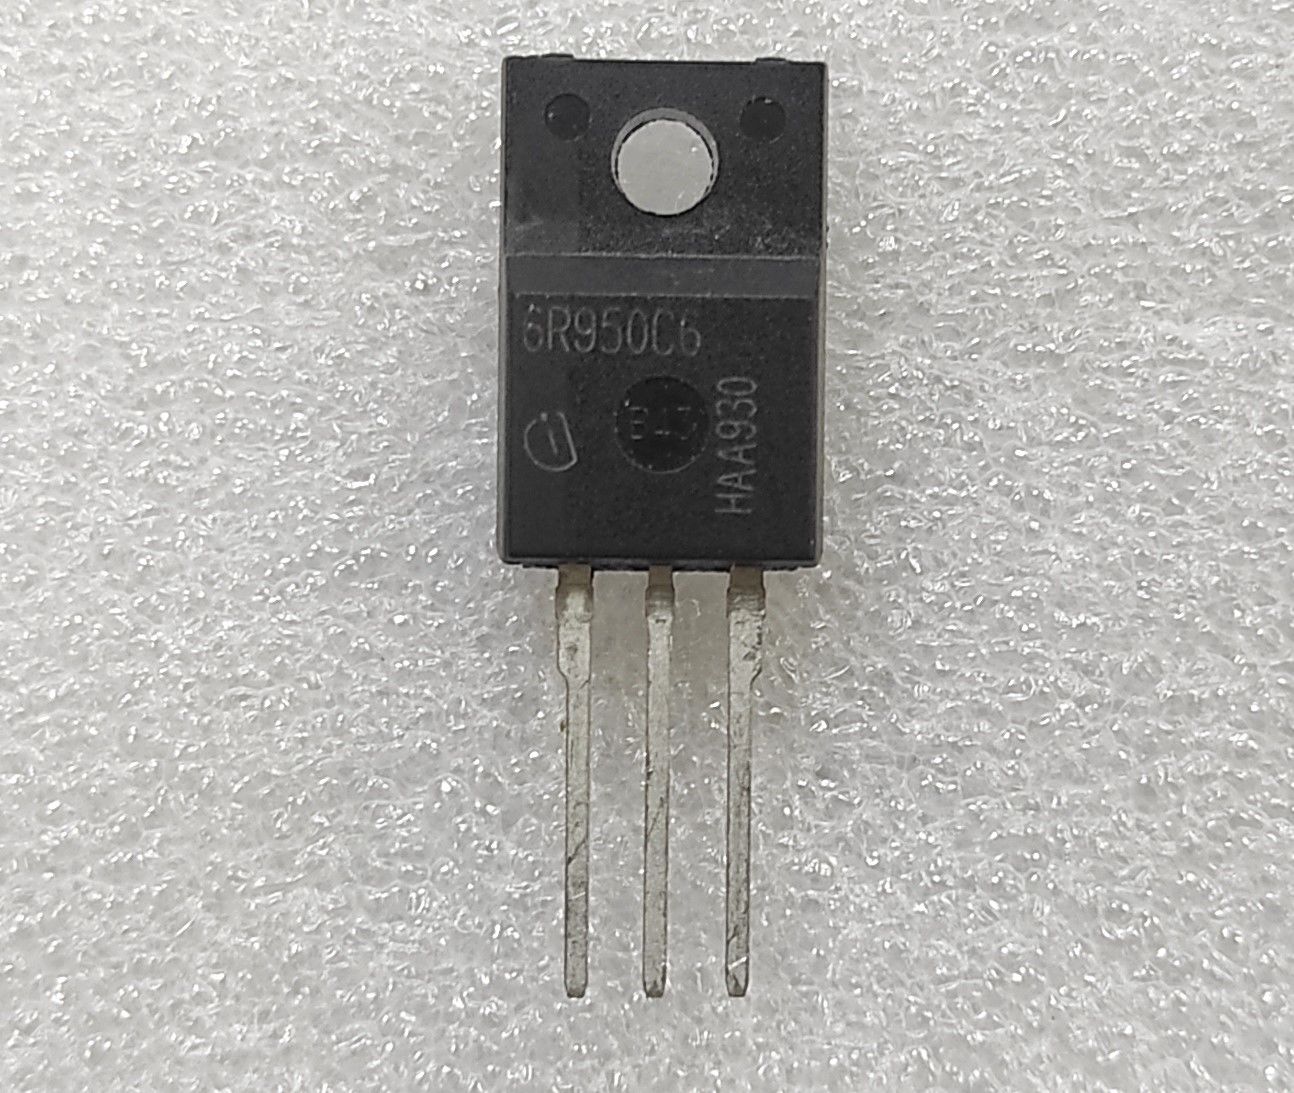 6R950C6 (IPA60R950C6 4.4A 600V N-CH TO220FP COOLMOS MOSFET)